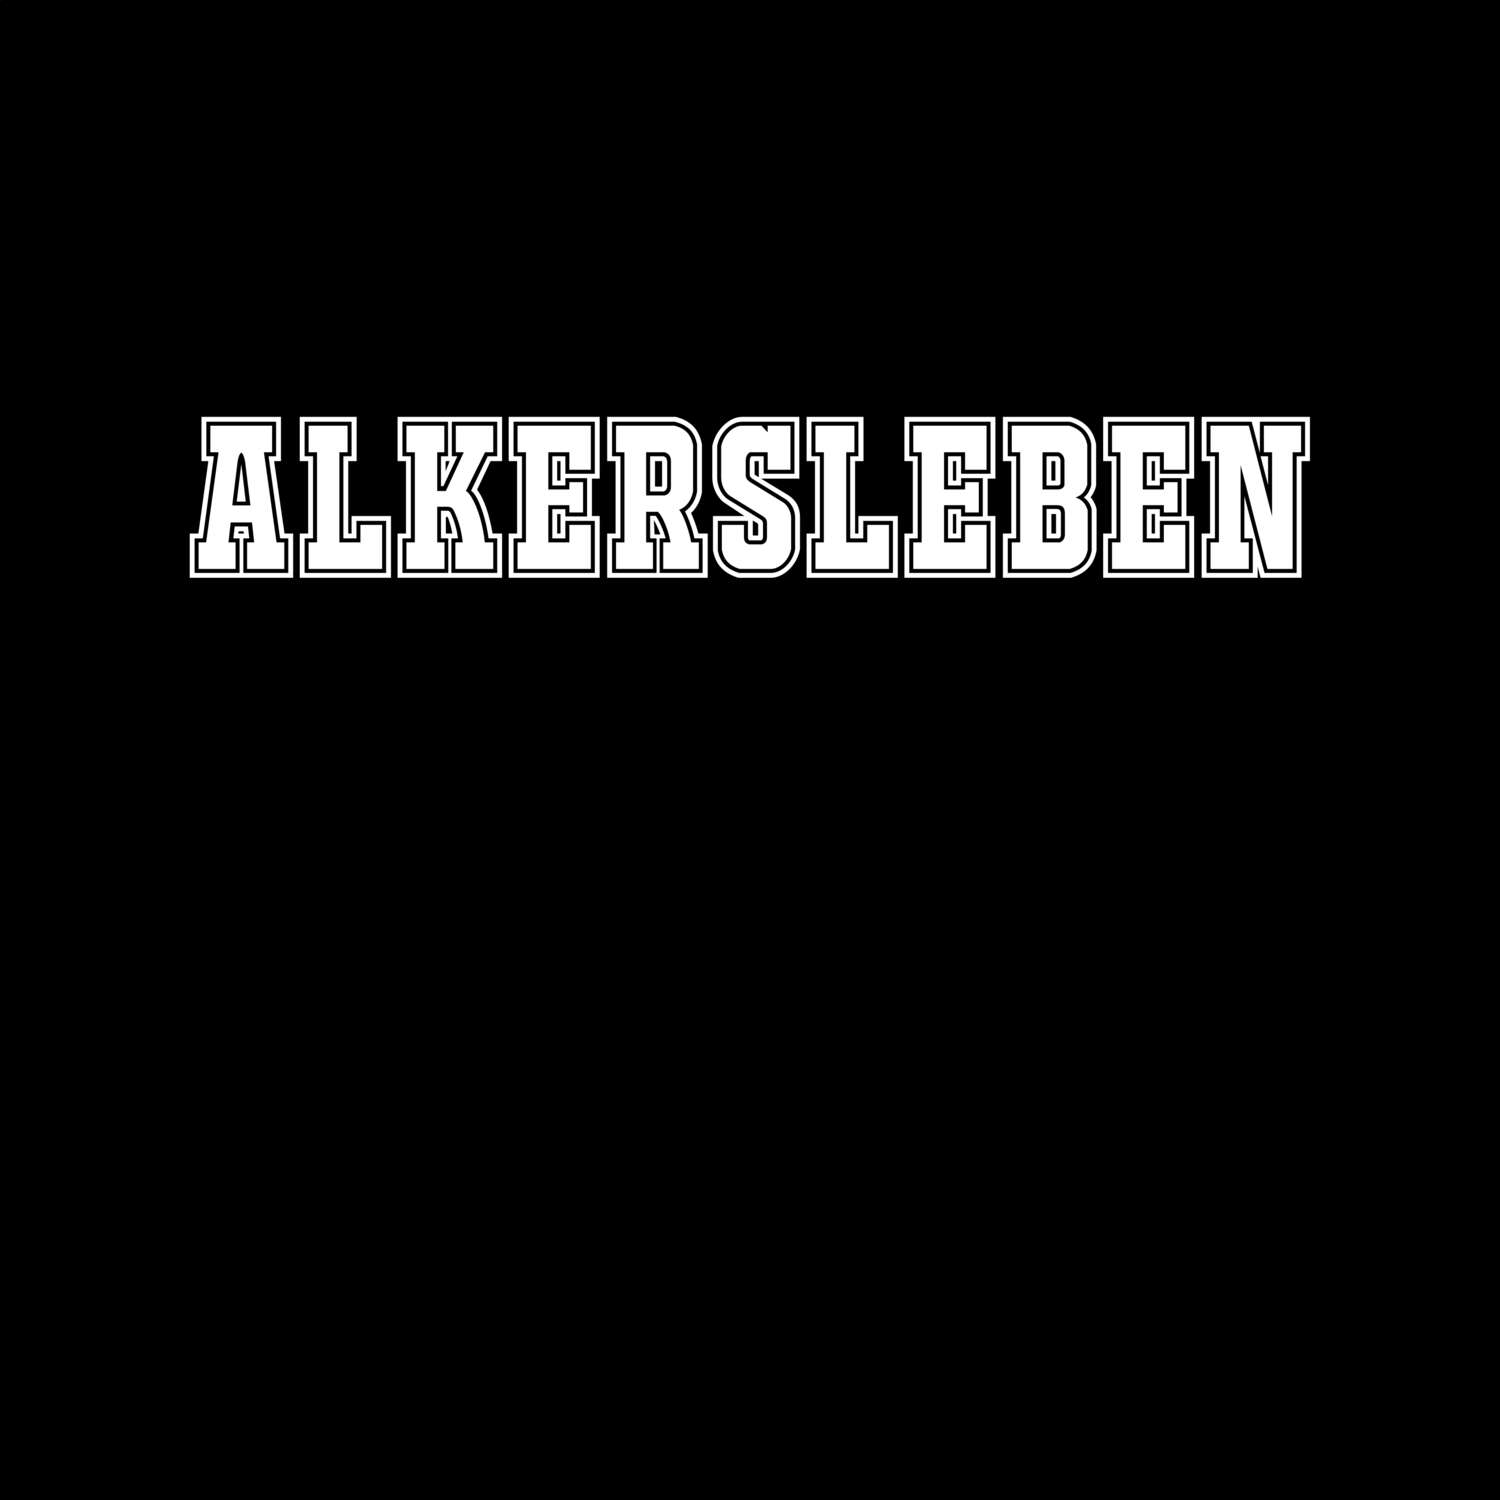 Alkersleben T-Shirt »Classic«